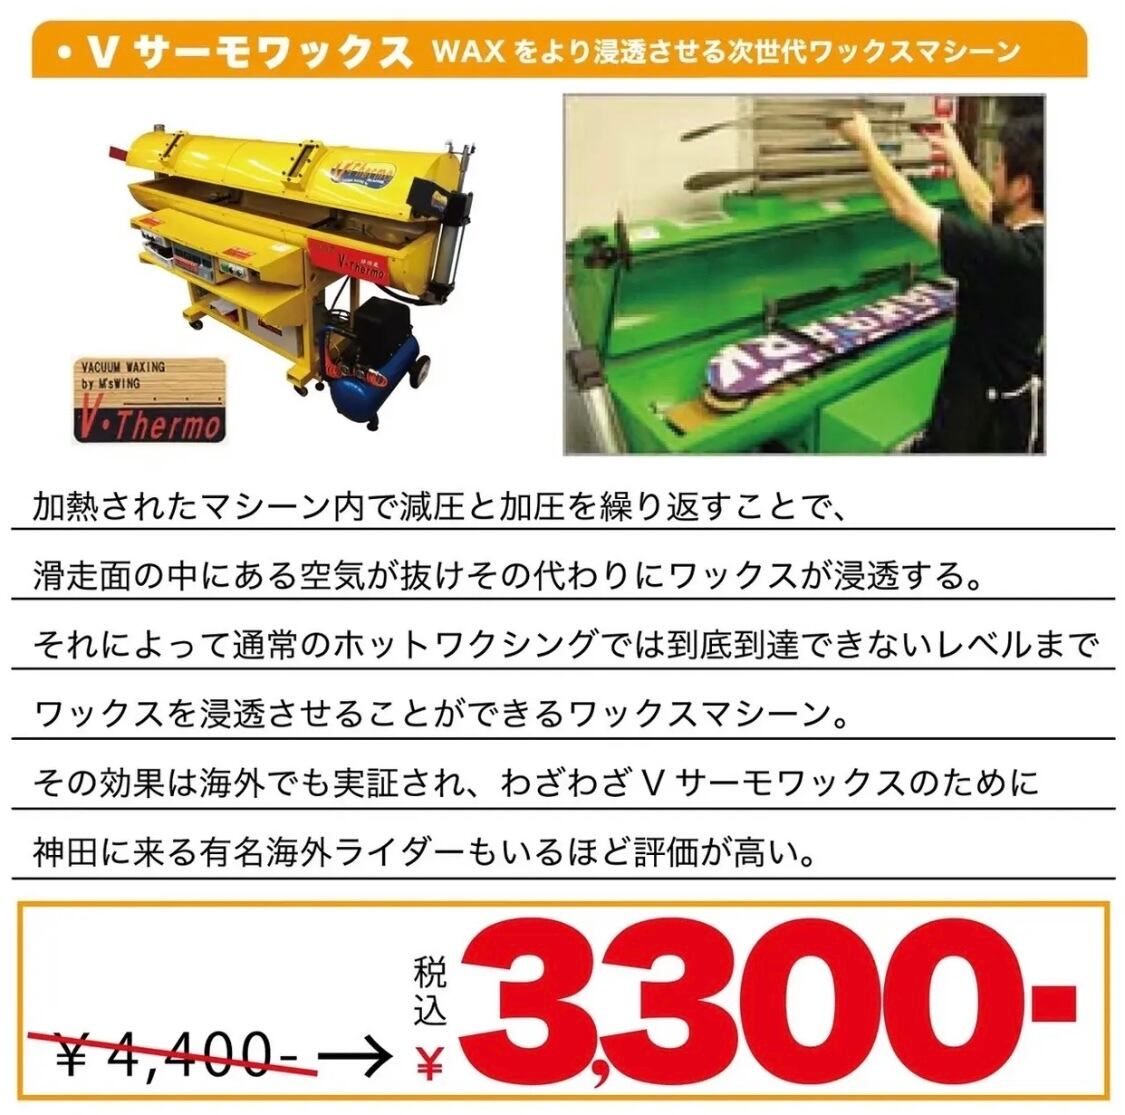 K2 ケーツー 【モデル】GEOMETRIC ジオメトリック　148センチ